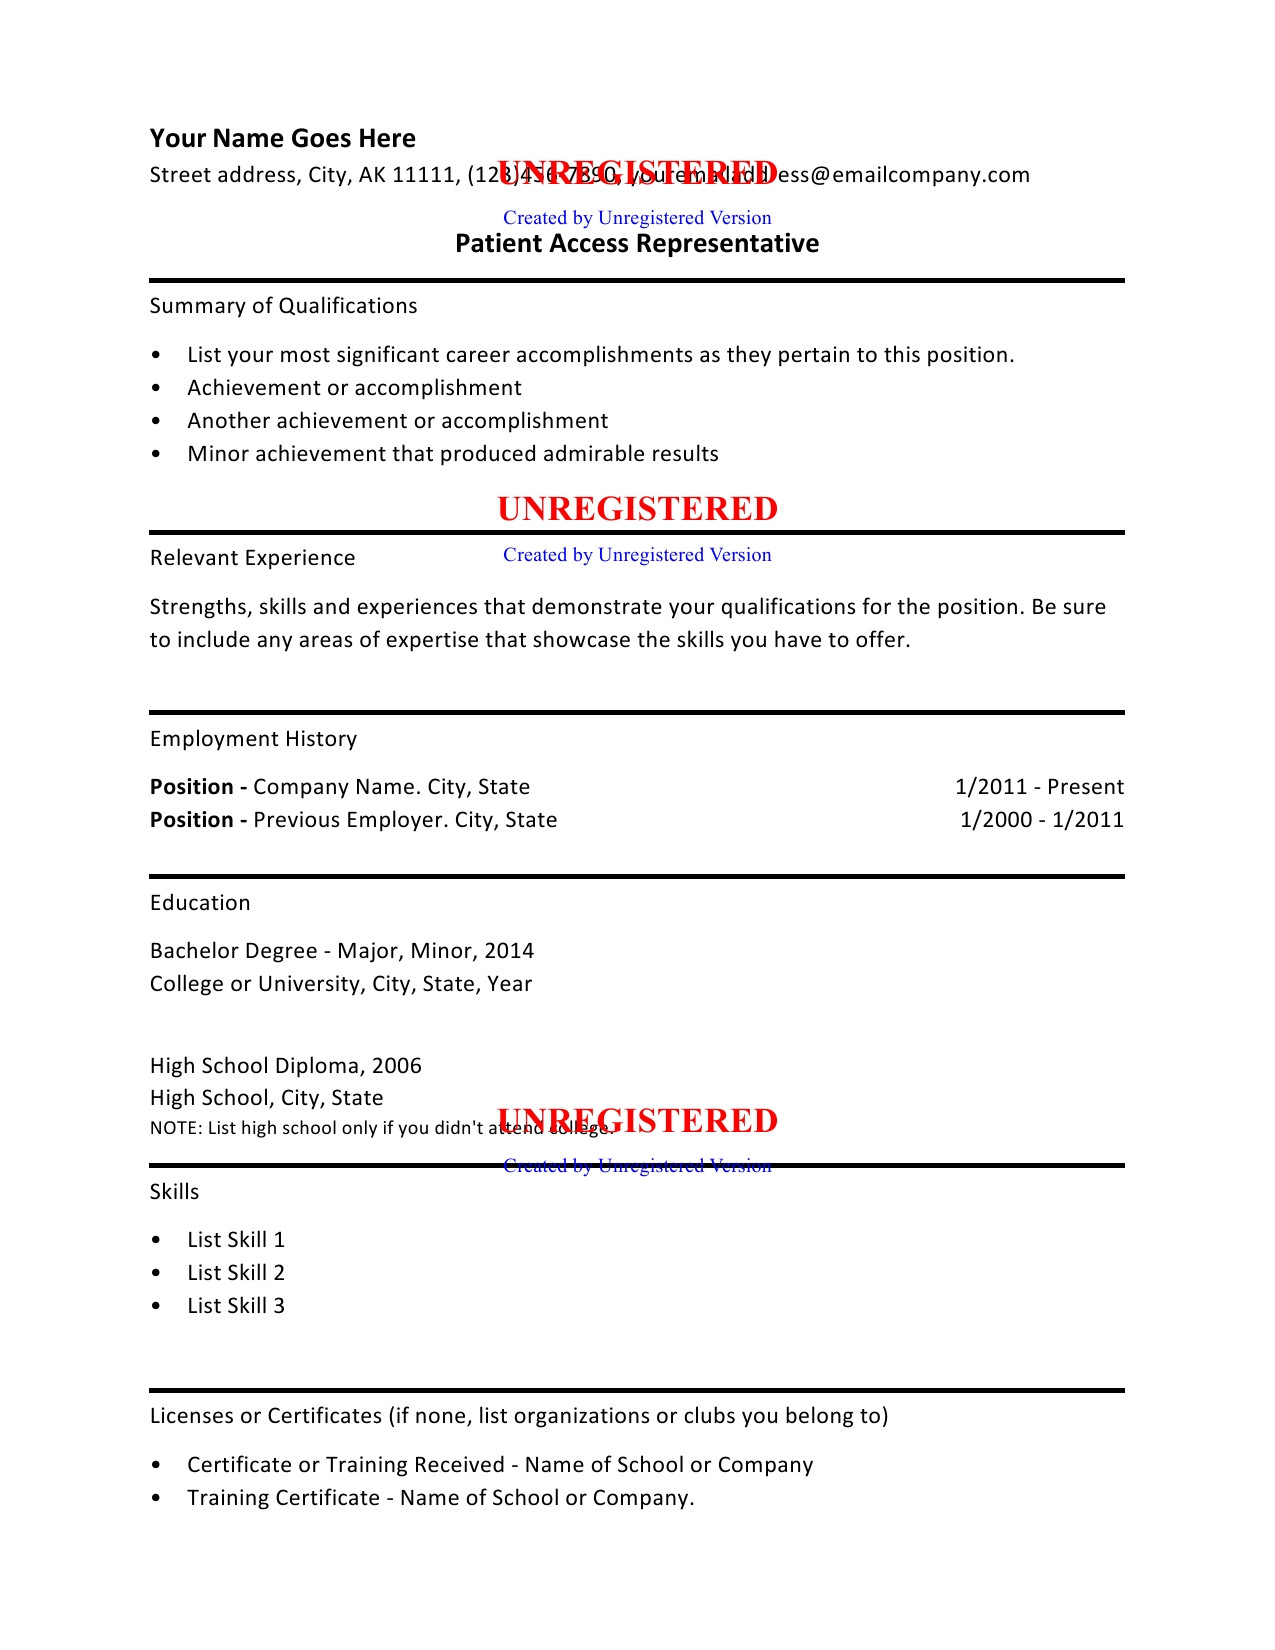 patient access representative resume template